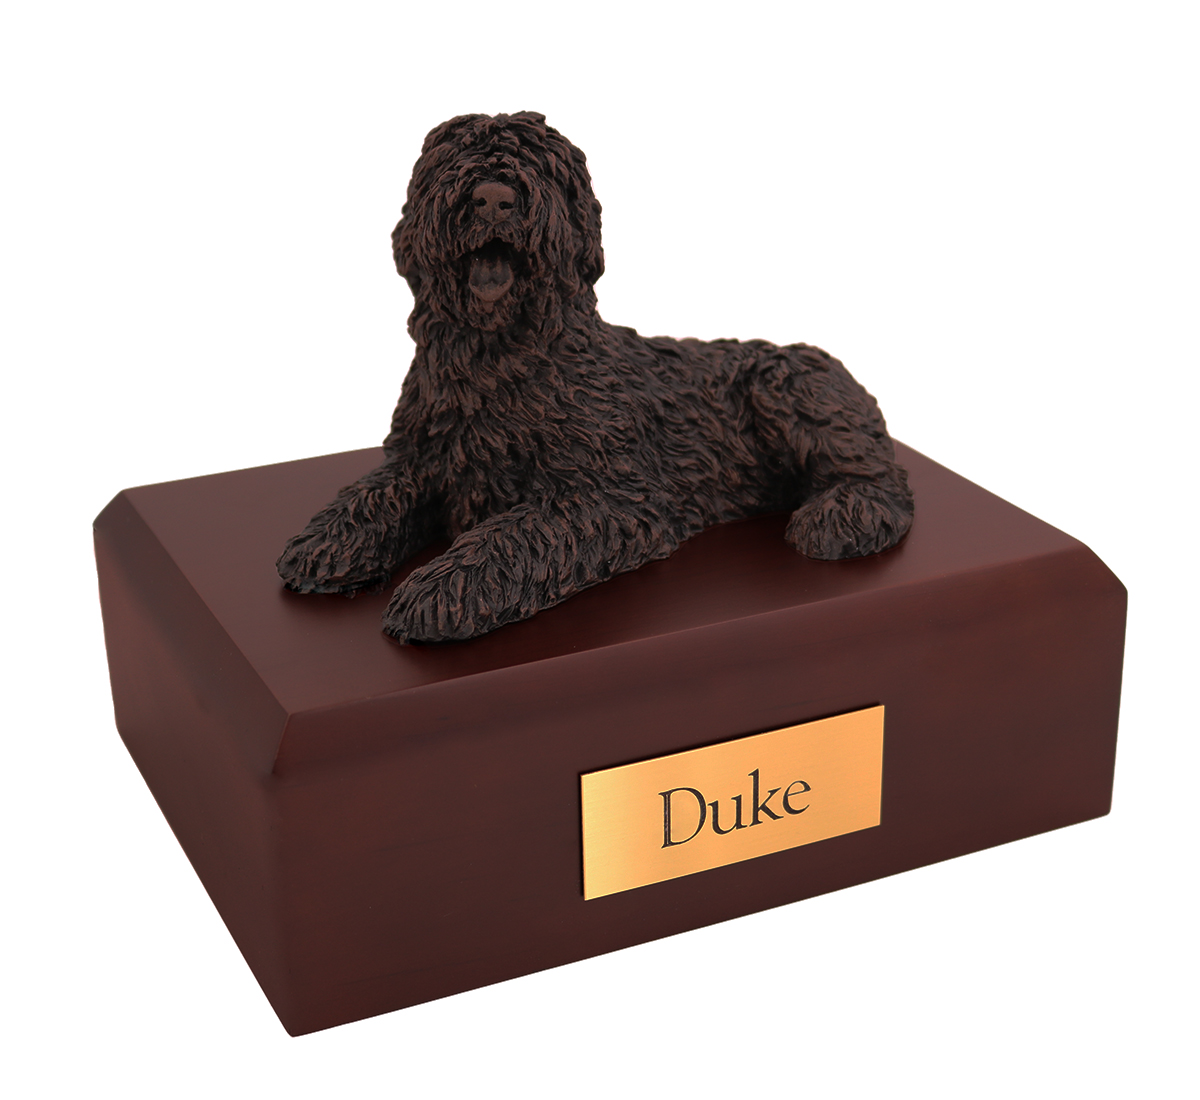 Dog, Sheepdog, Bronze - Figurine Urn